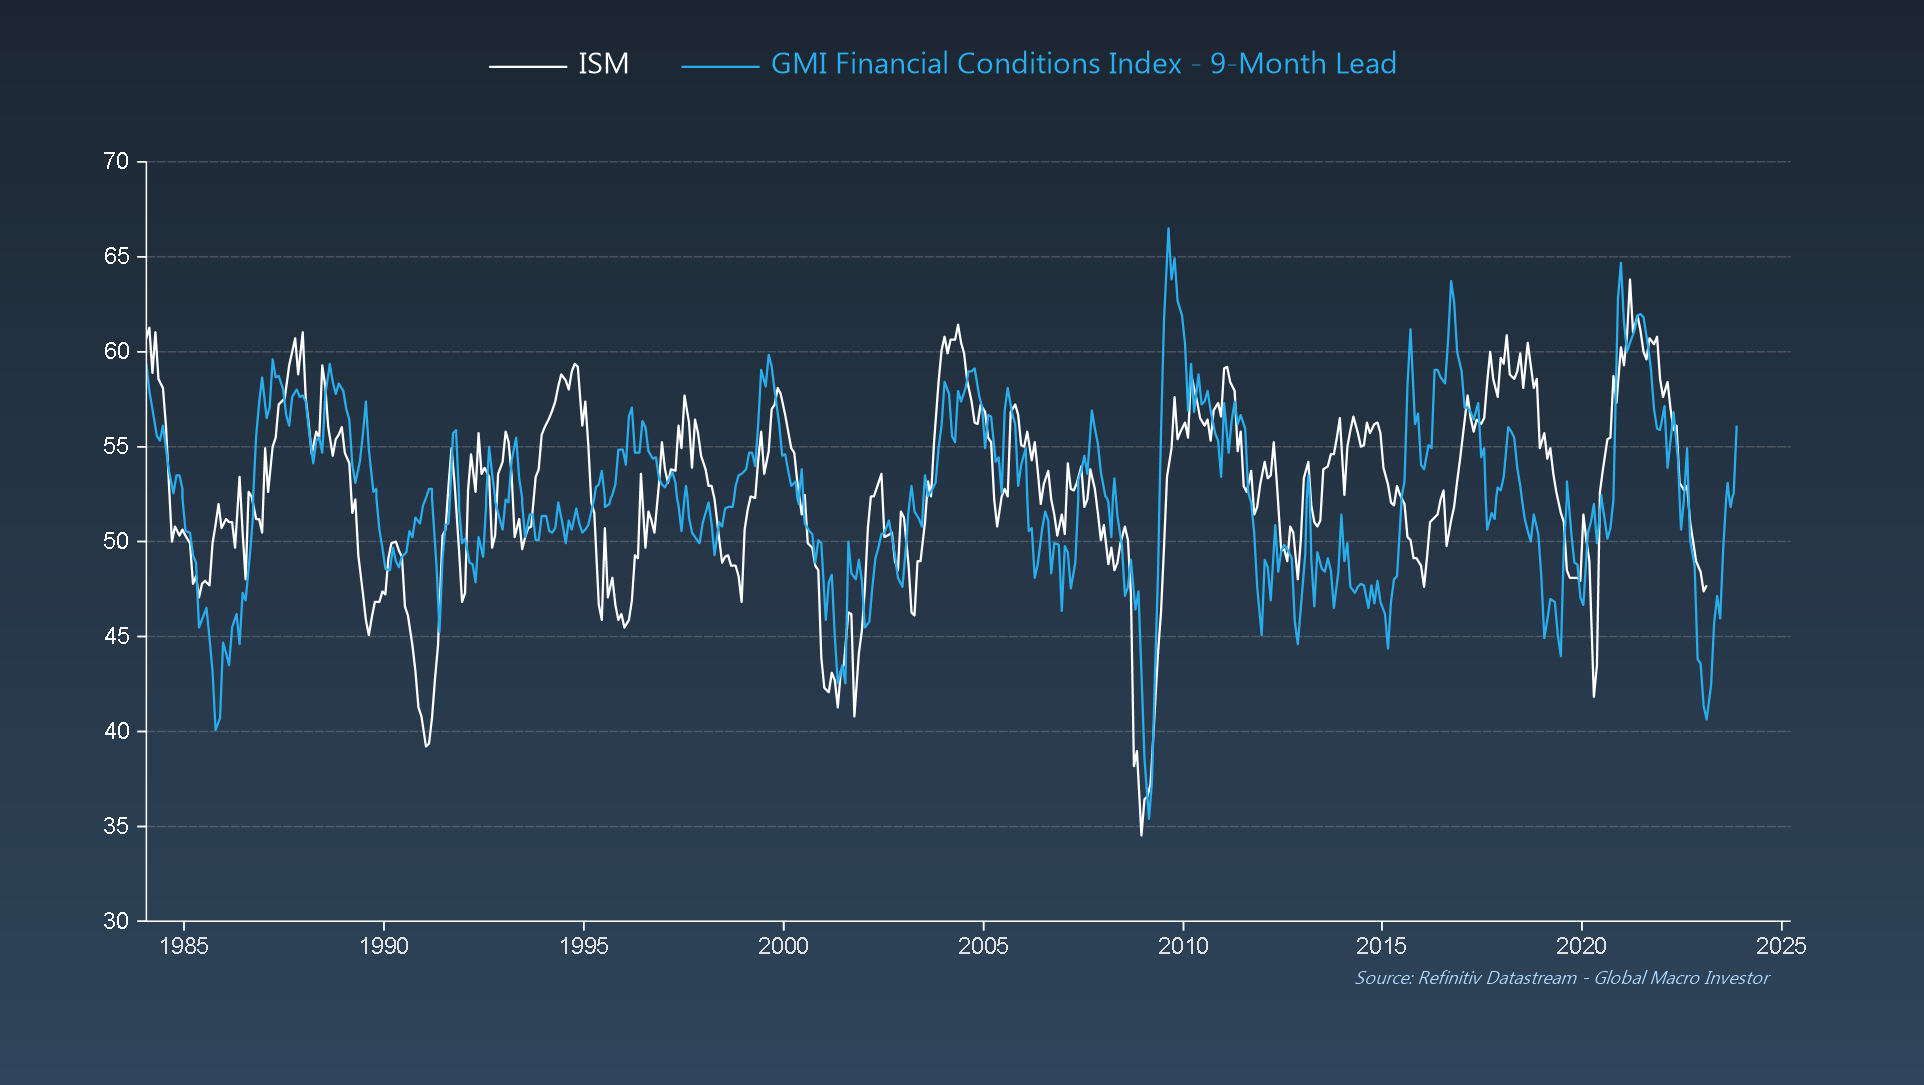 ISM vs. GMI Financial Conditions Index